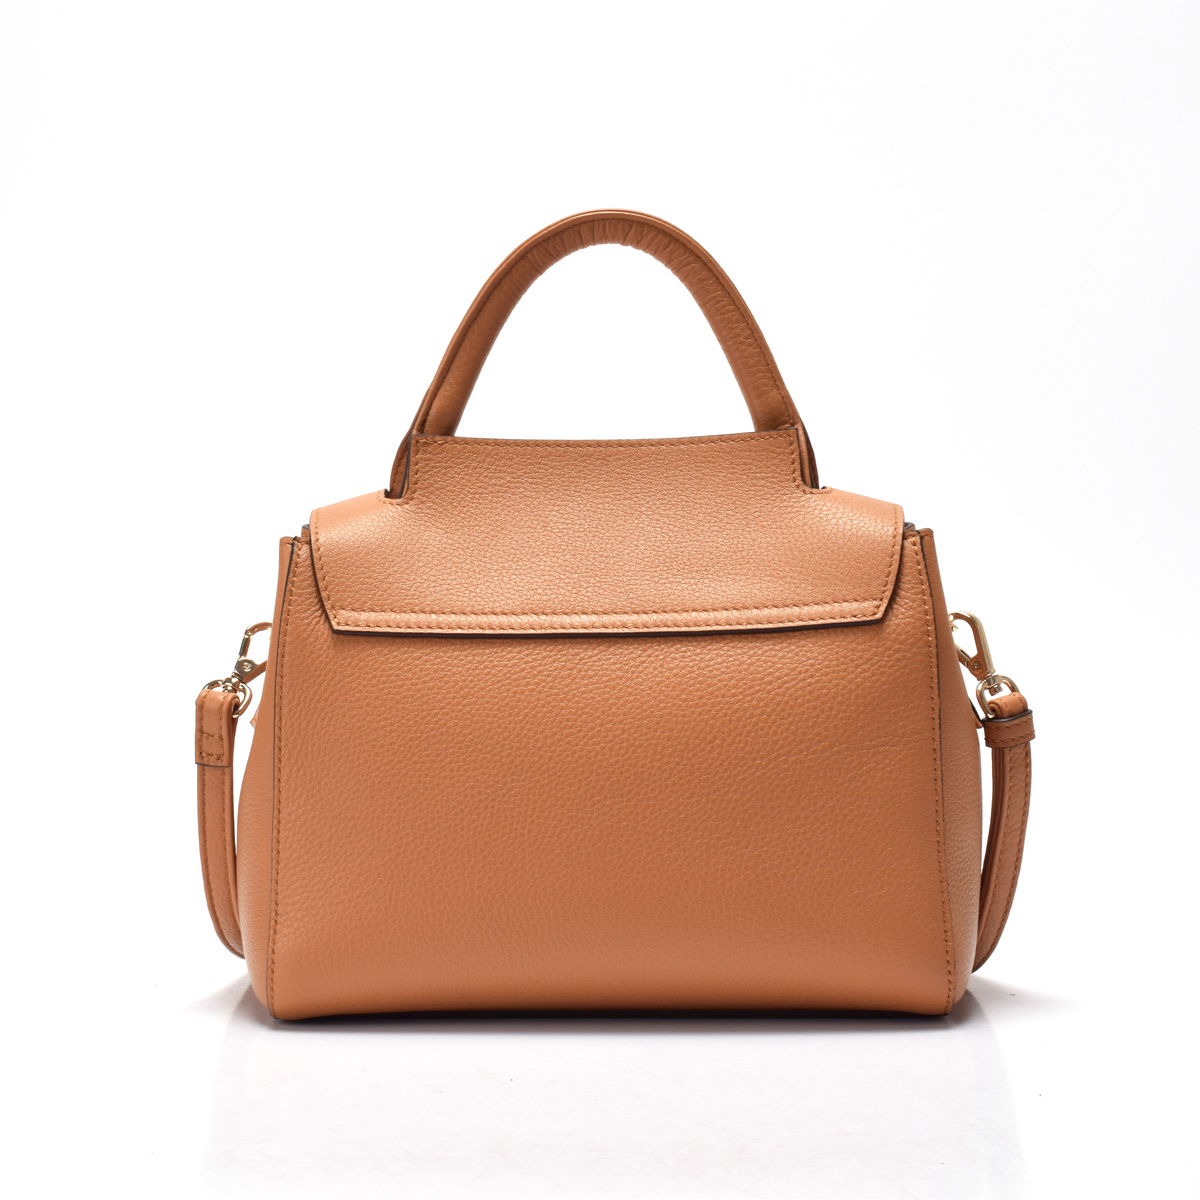 New jessica simpson handbags handbag Suppliers for women-1